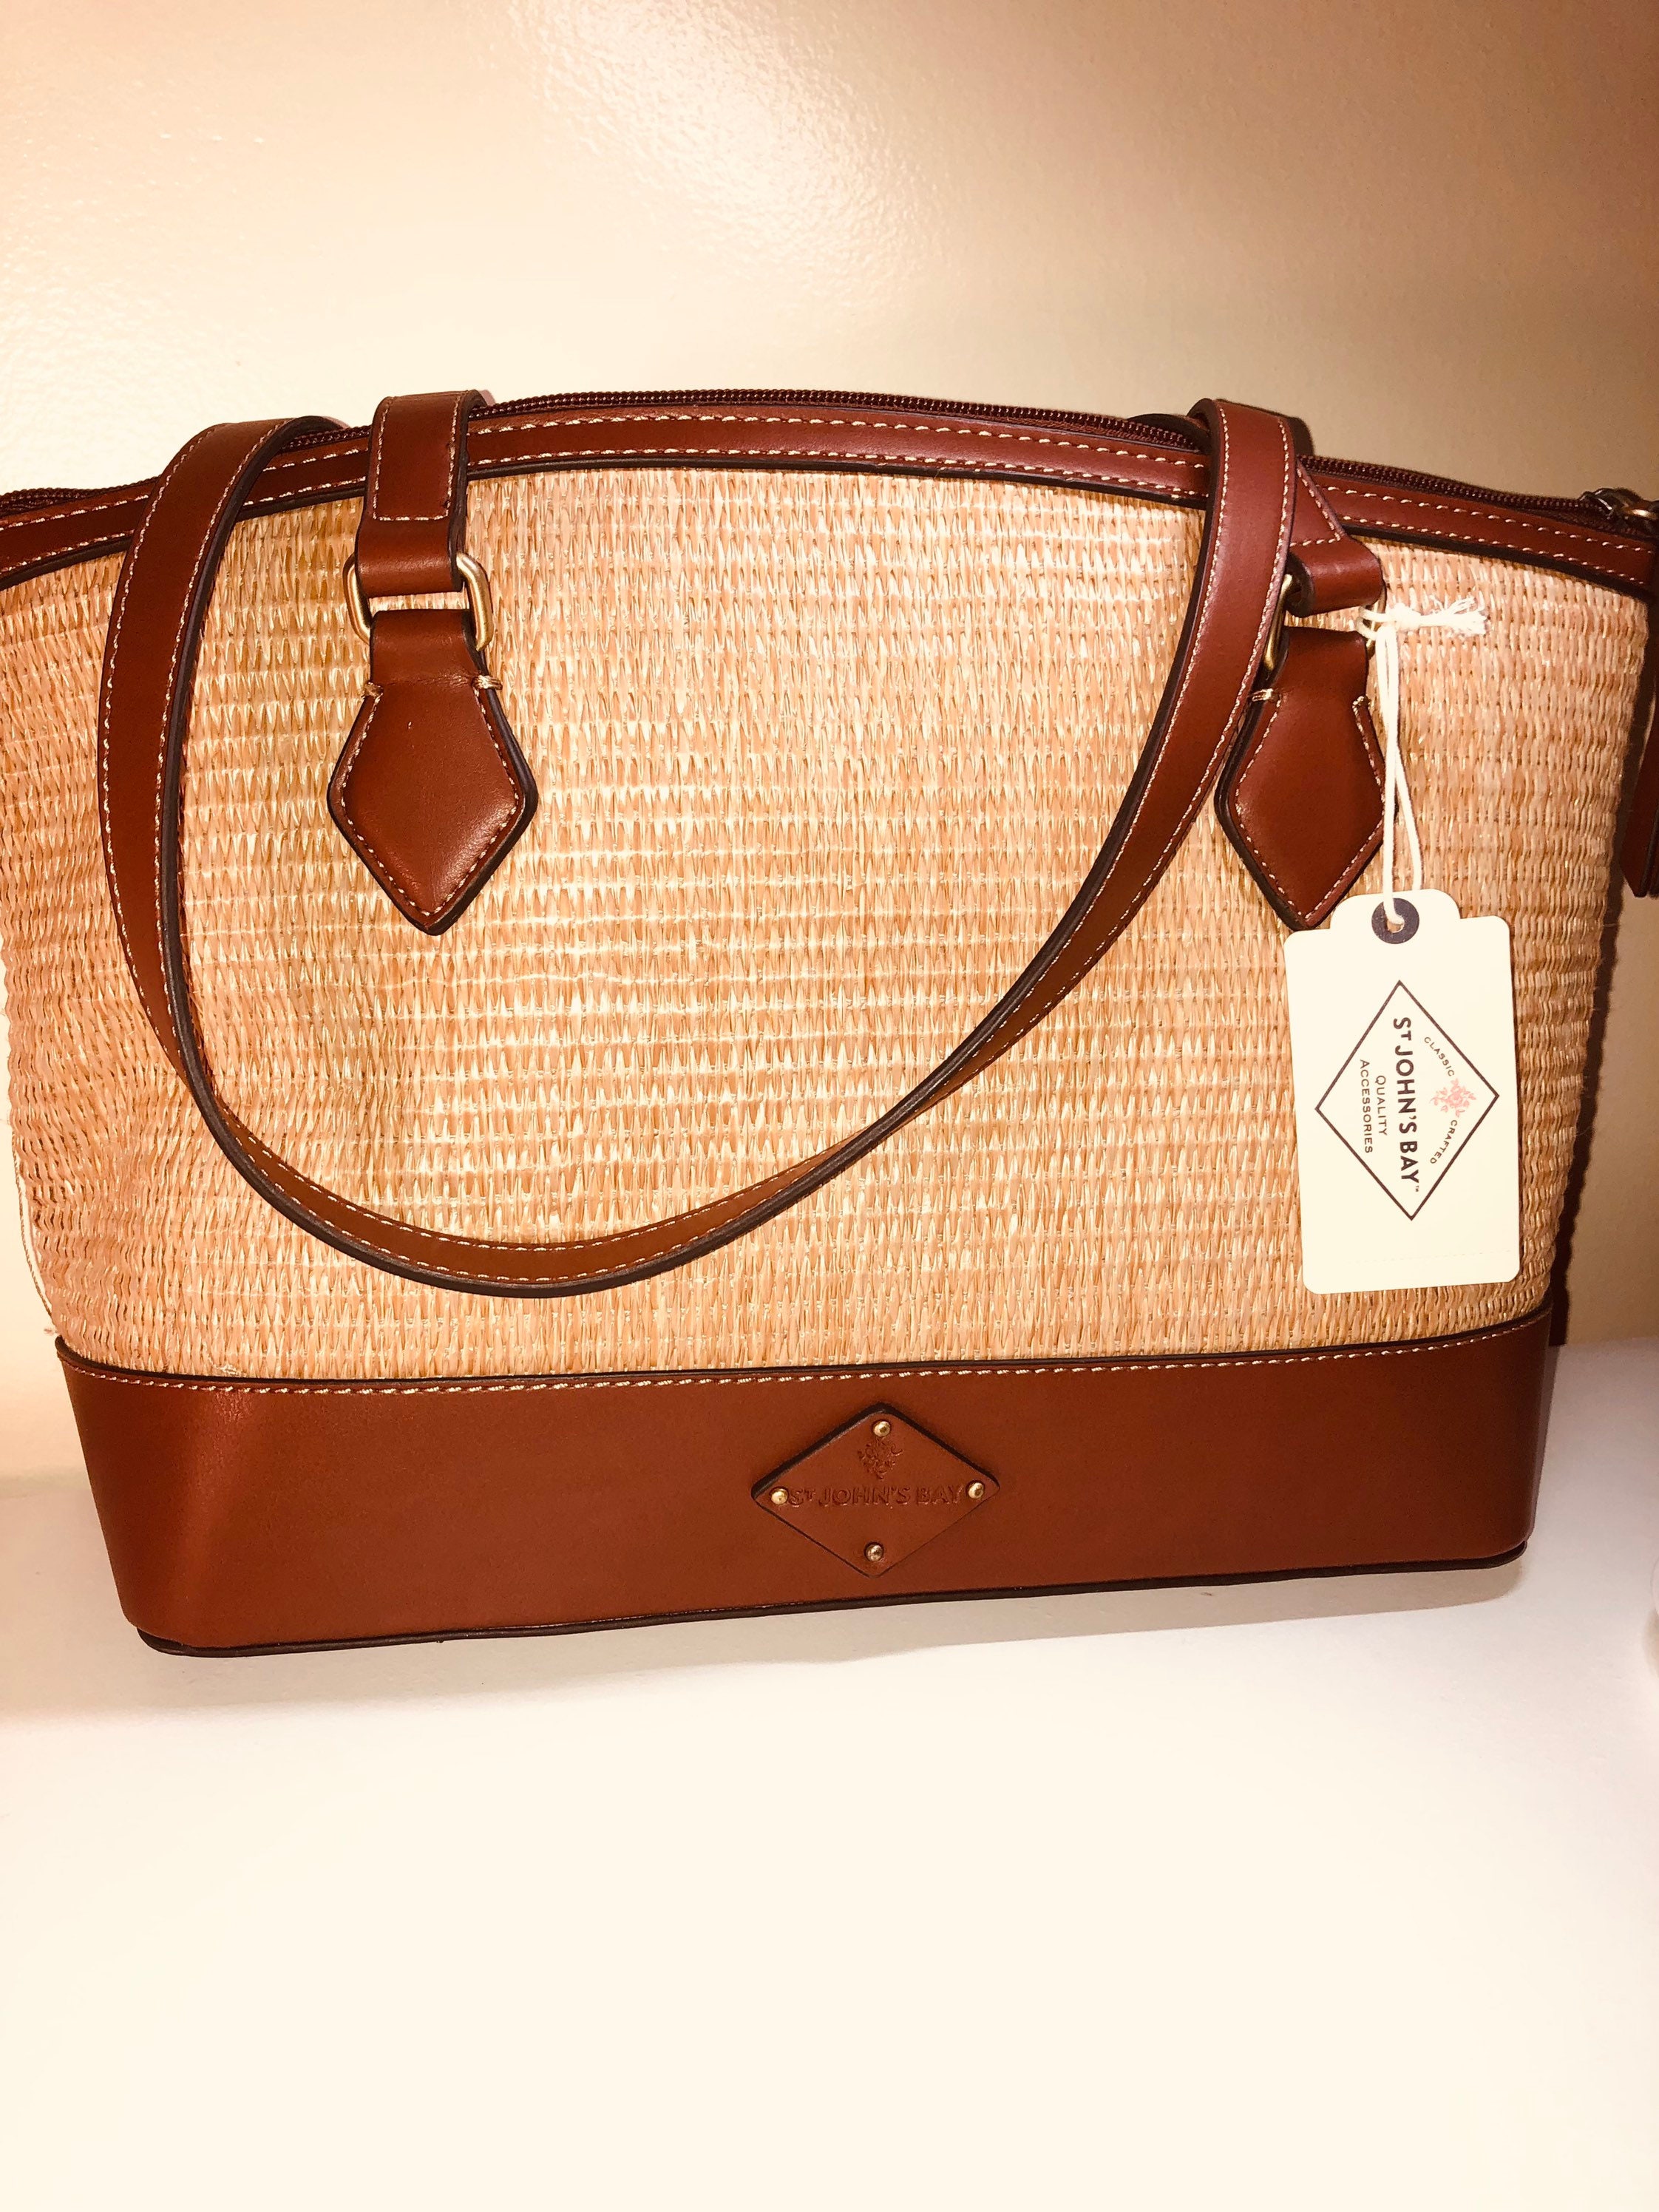 Buy Leather Handbags, Purses, Wallets & More - Derek Alexander